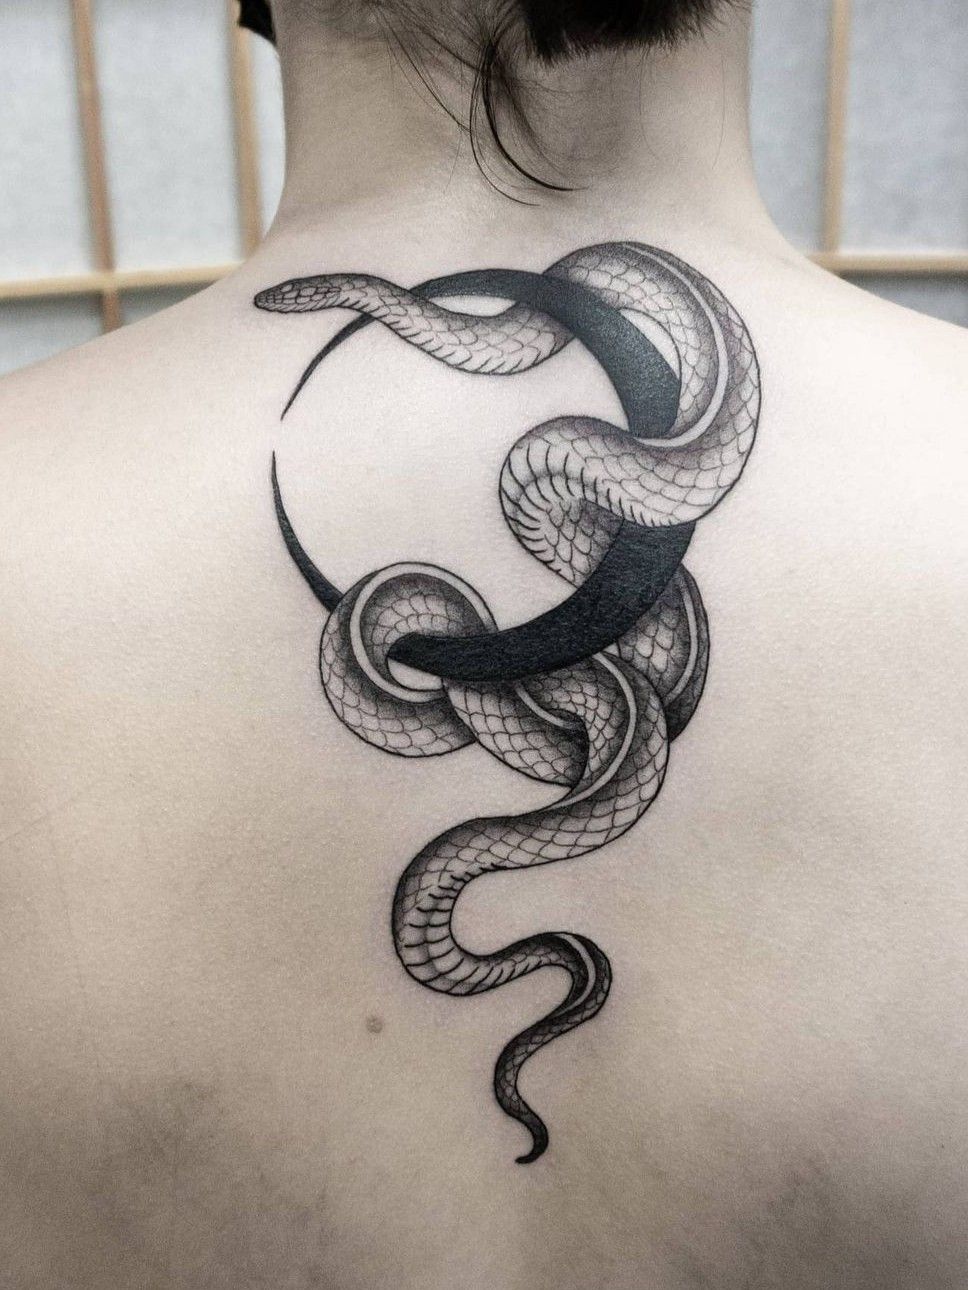 Time lapse of a snake tattoo that wraps around arm which was the trick   TikTok